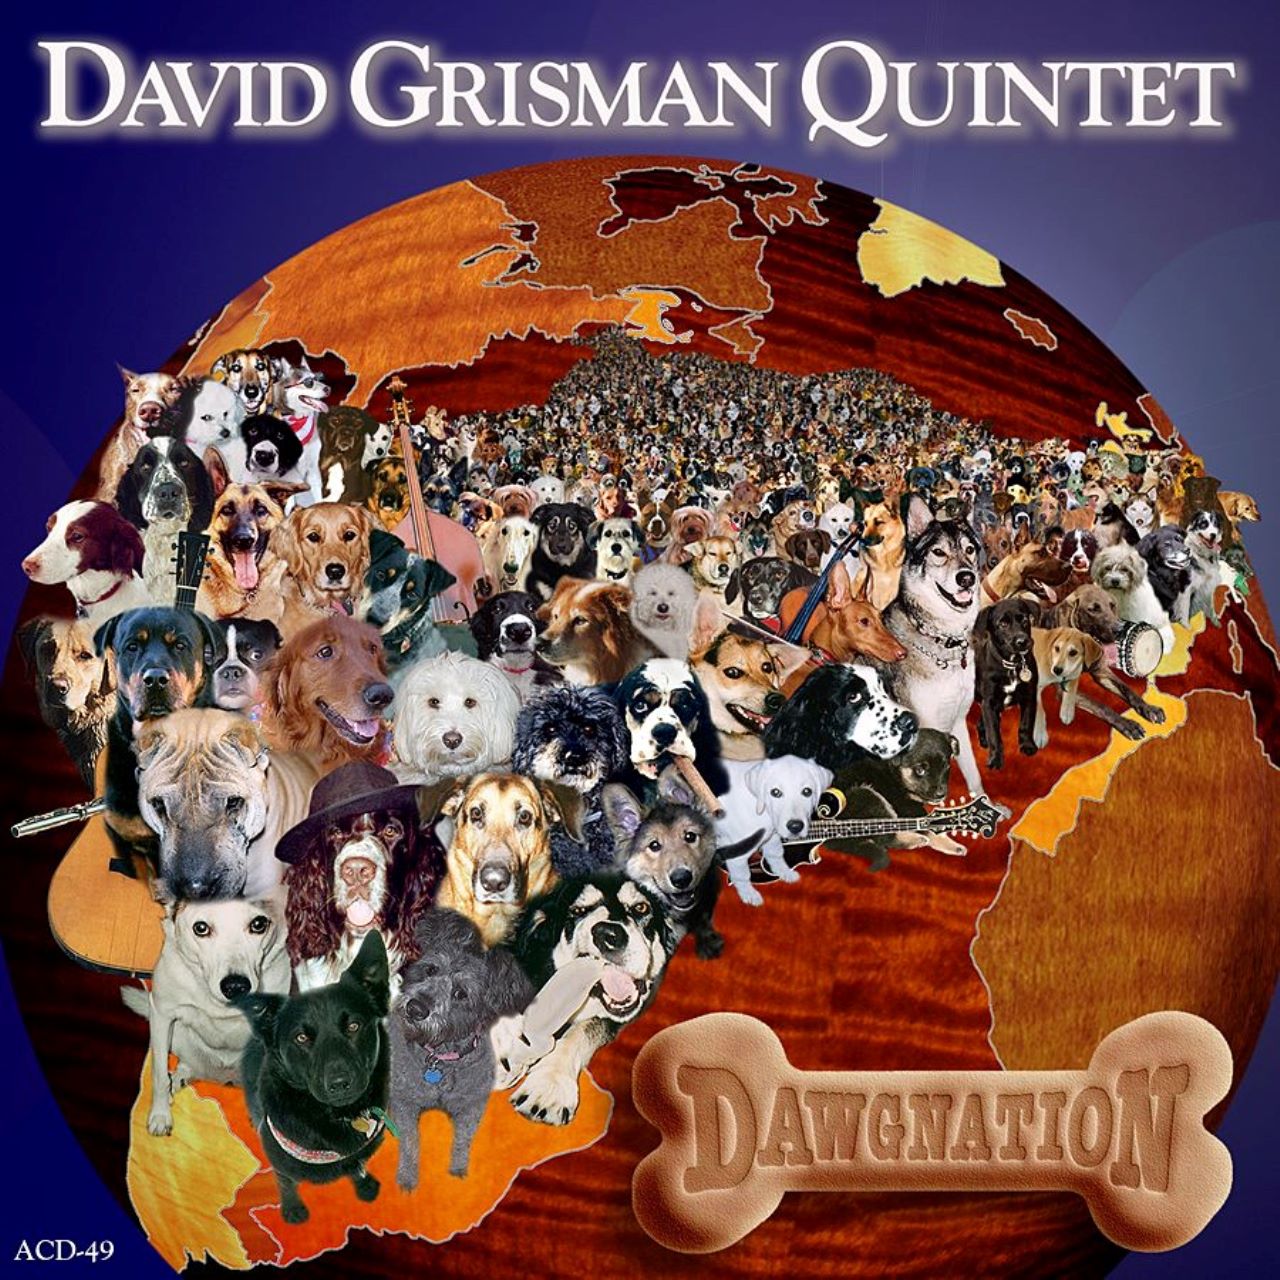 David Grisman Quintet - Dawgnation cover album